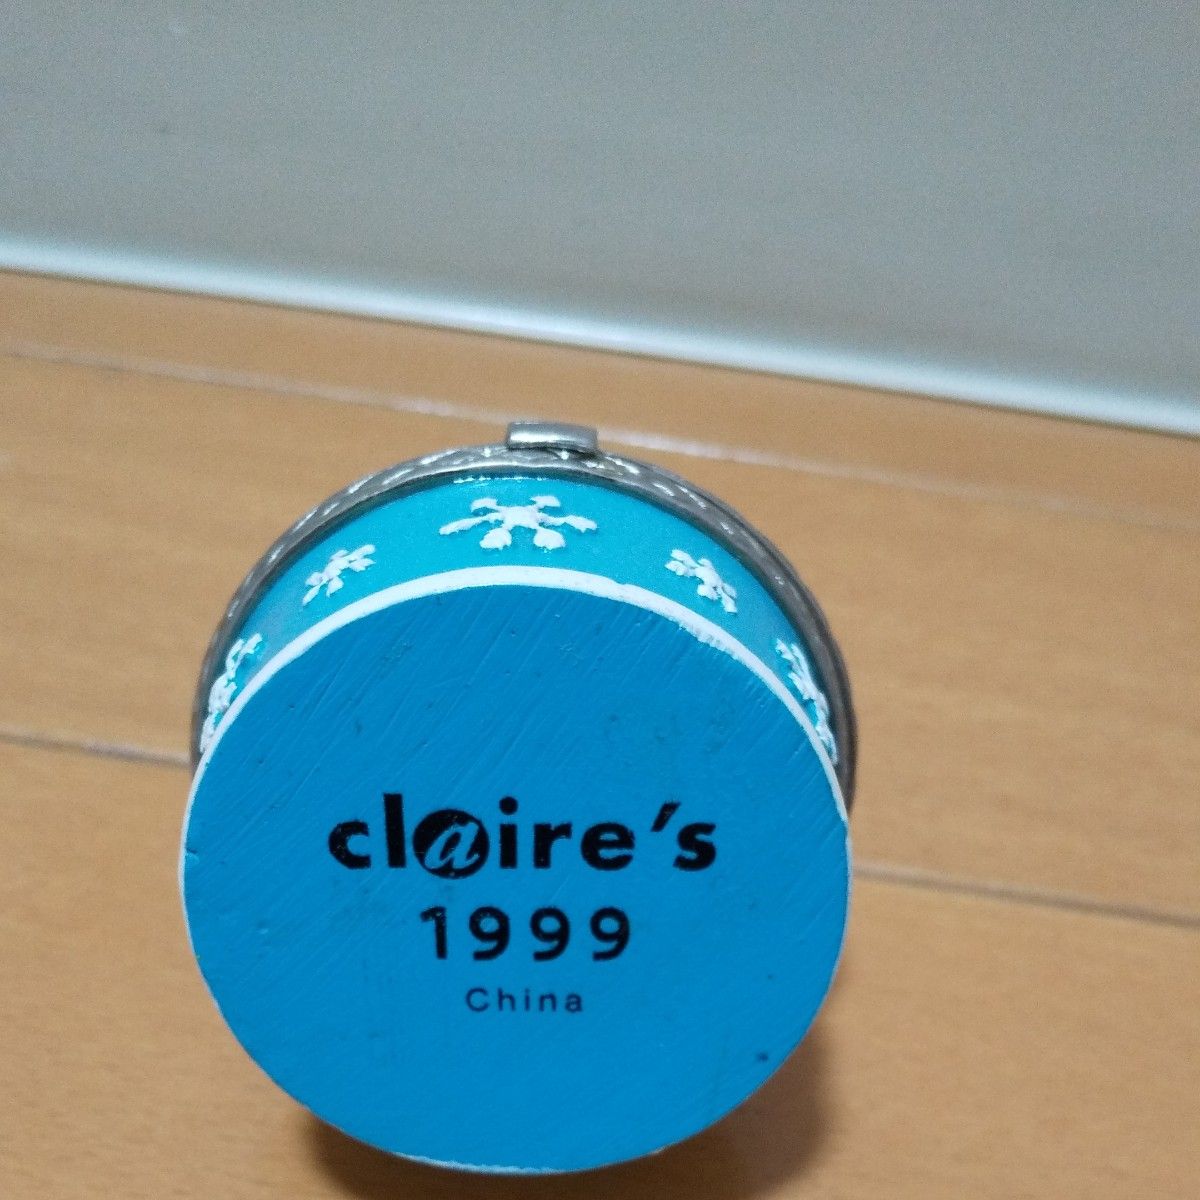 claire's  1999